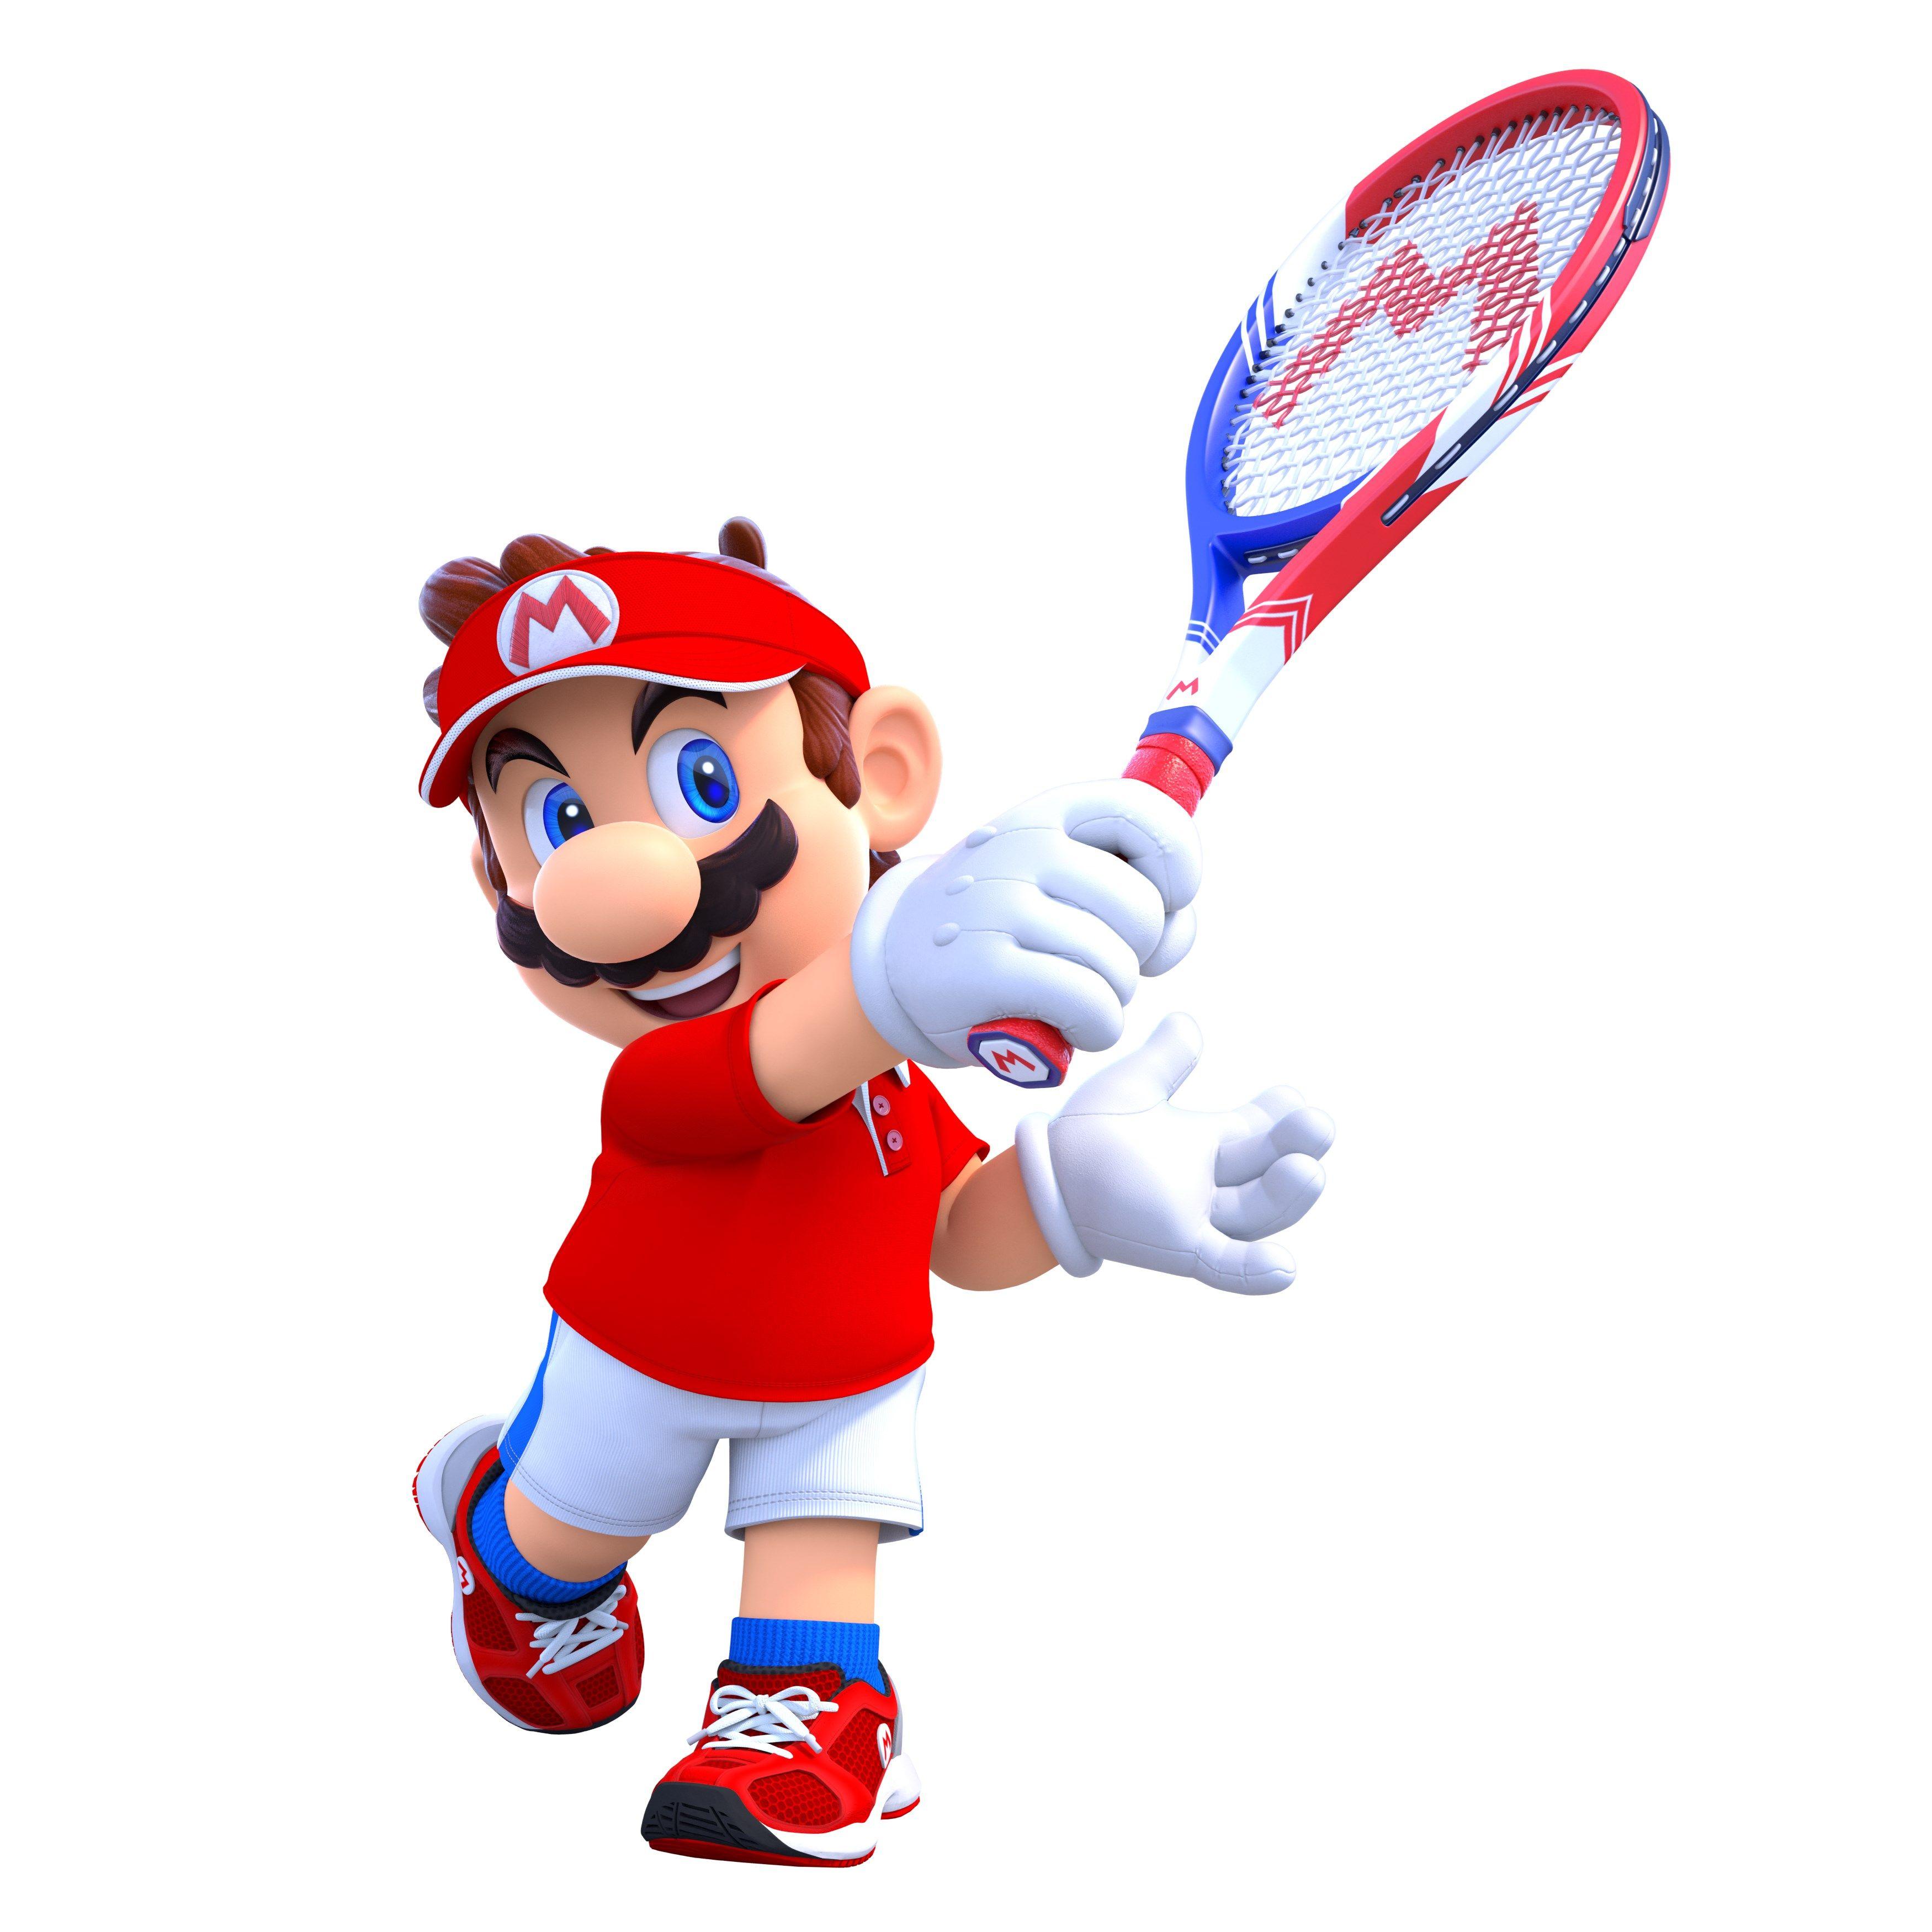 North American Mario Tennis Aces boxart, screenshots, character art